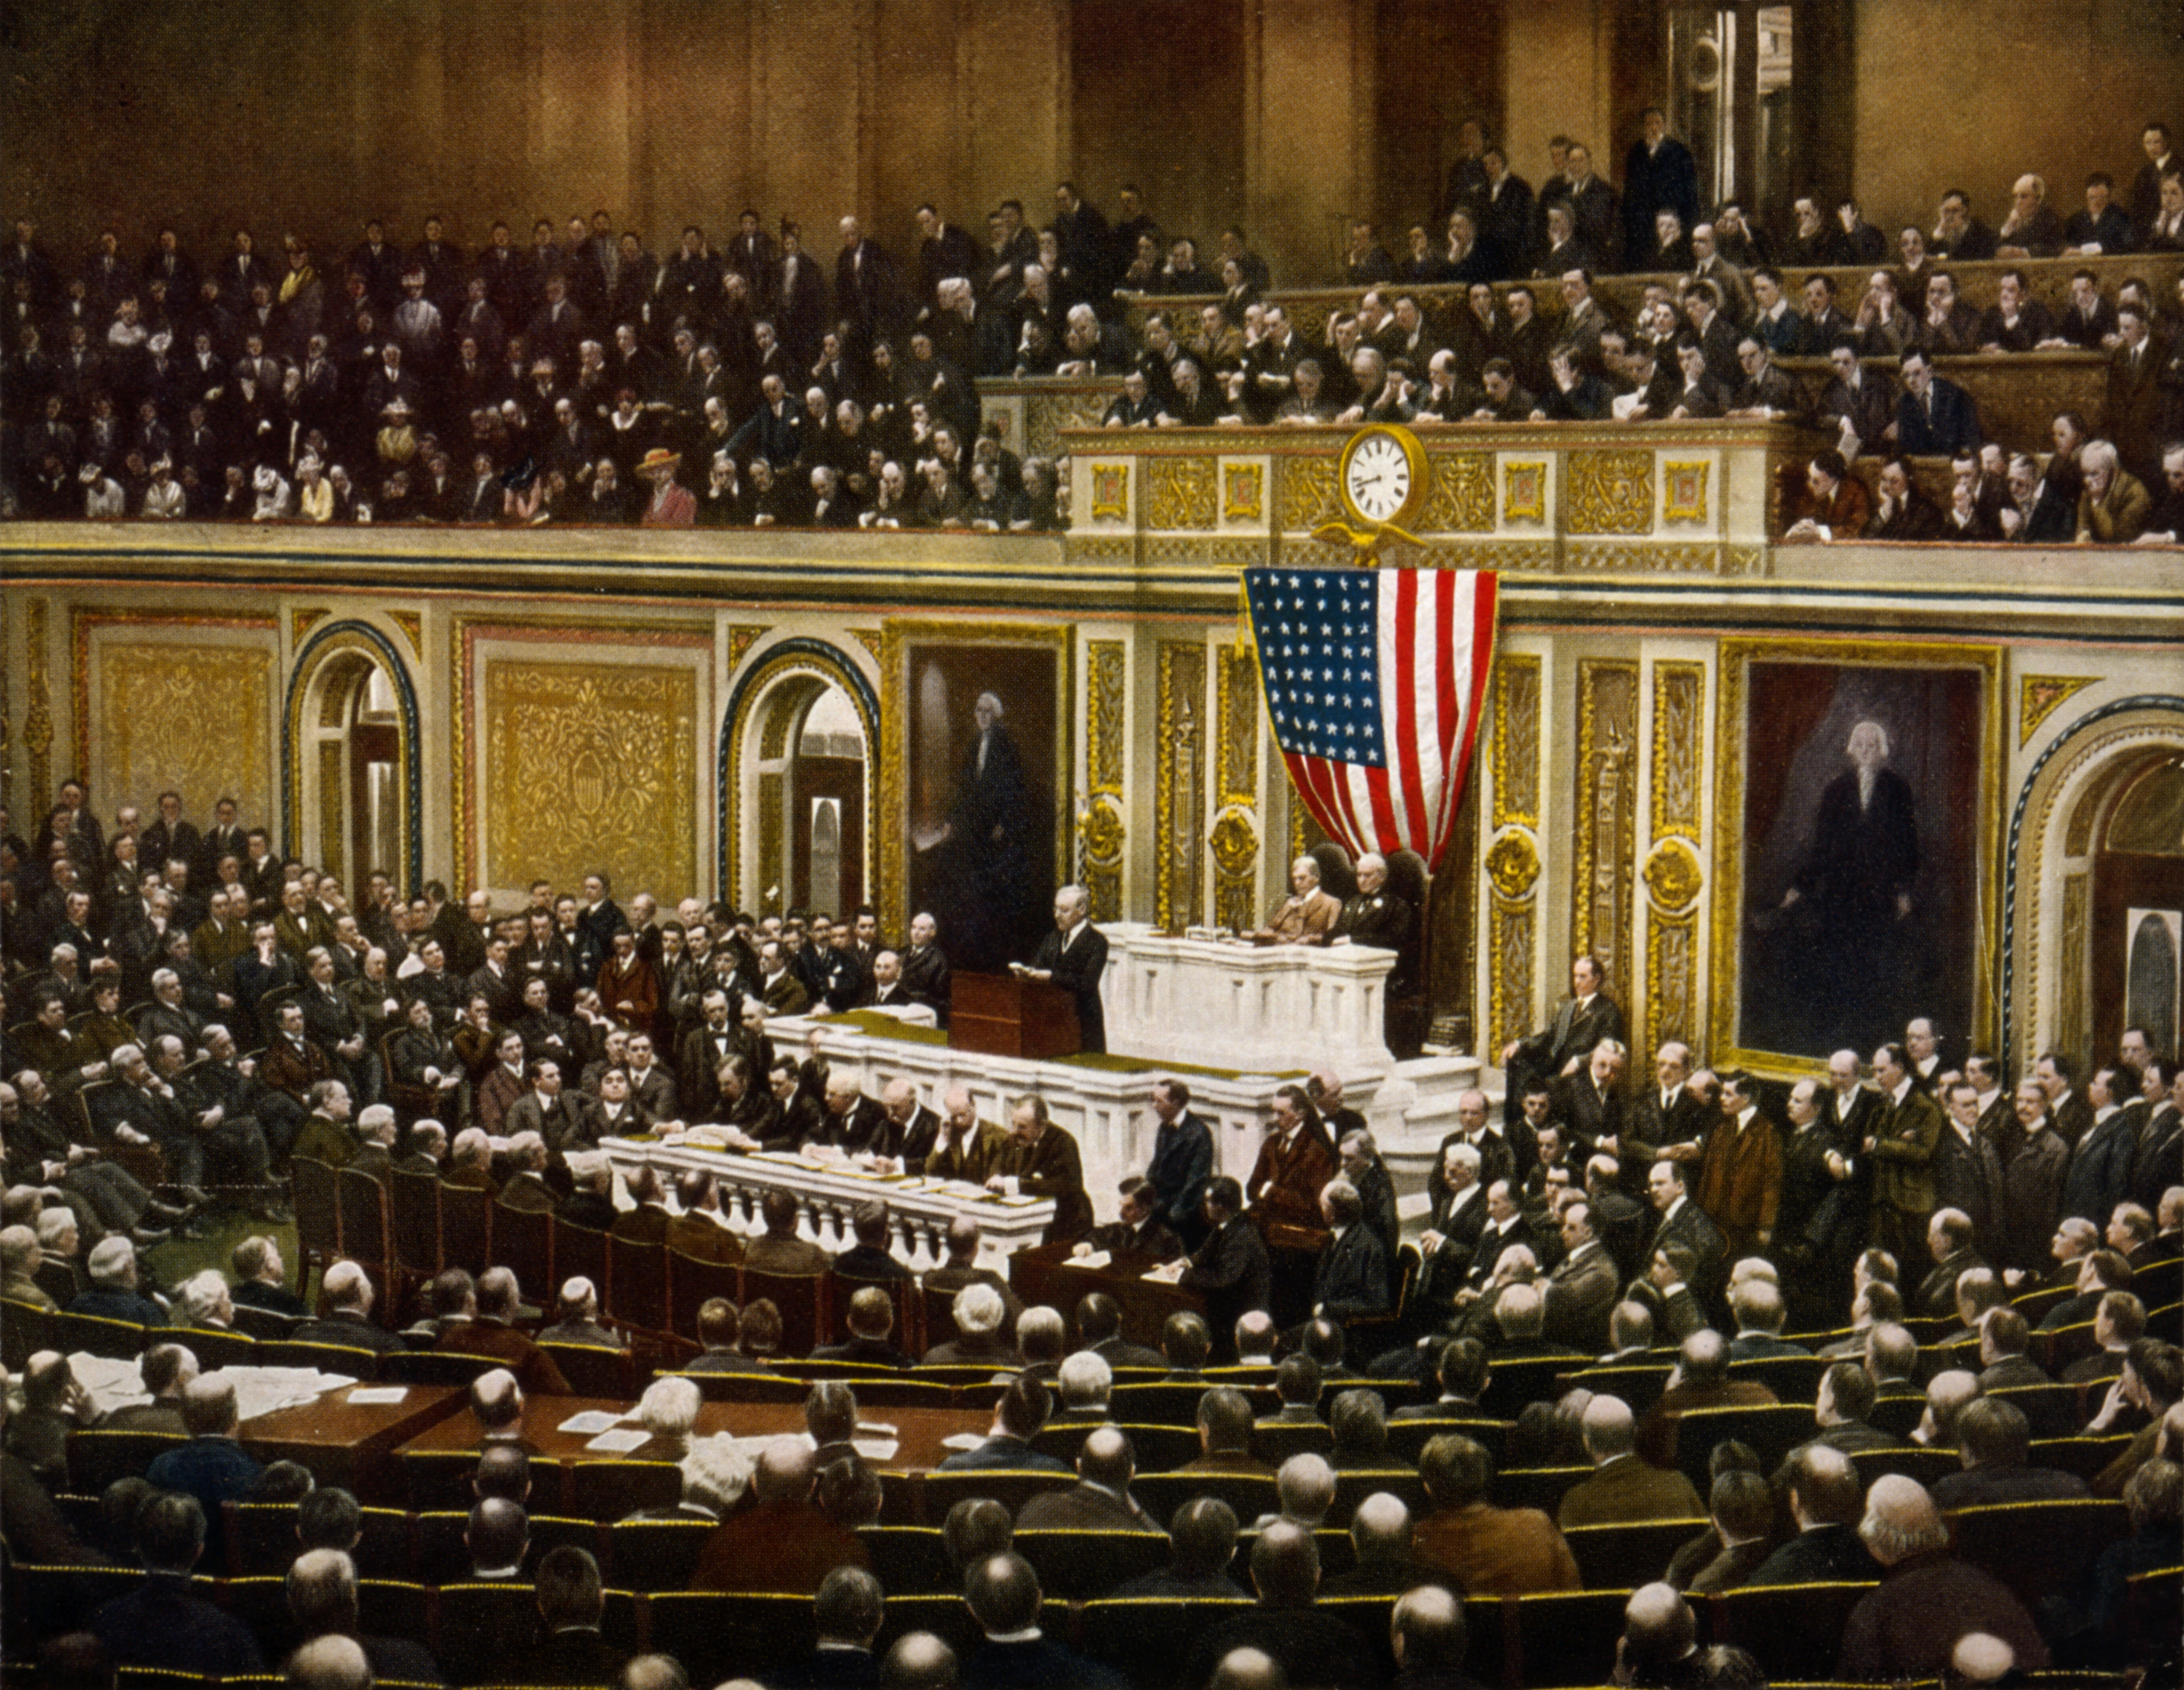 President Wilson addressing Congress, April 2, 1917